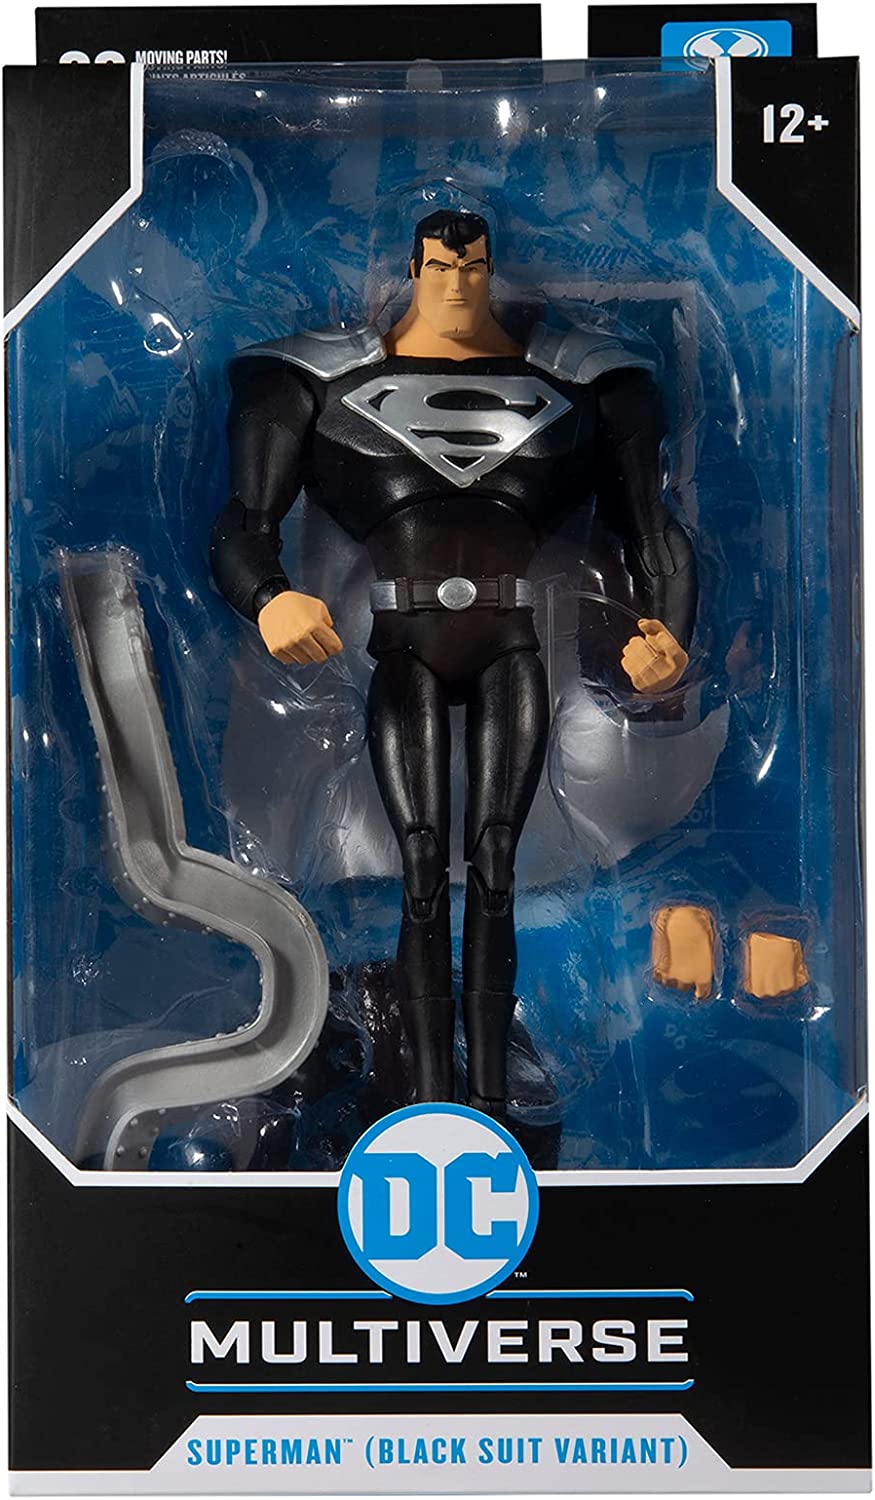 McFarlane Toys: DC Multiverse - Superman, Black Suit Variant (Superman the Animated Series) - Third Eye